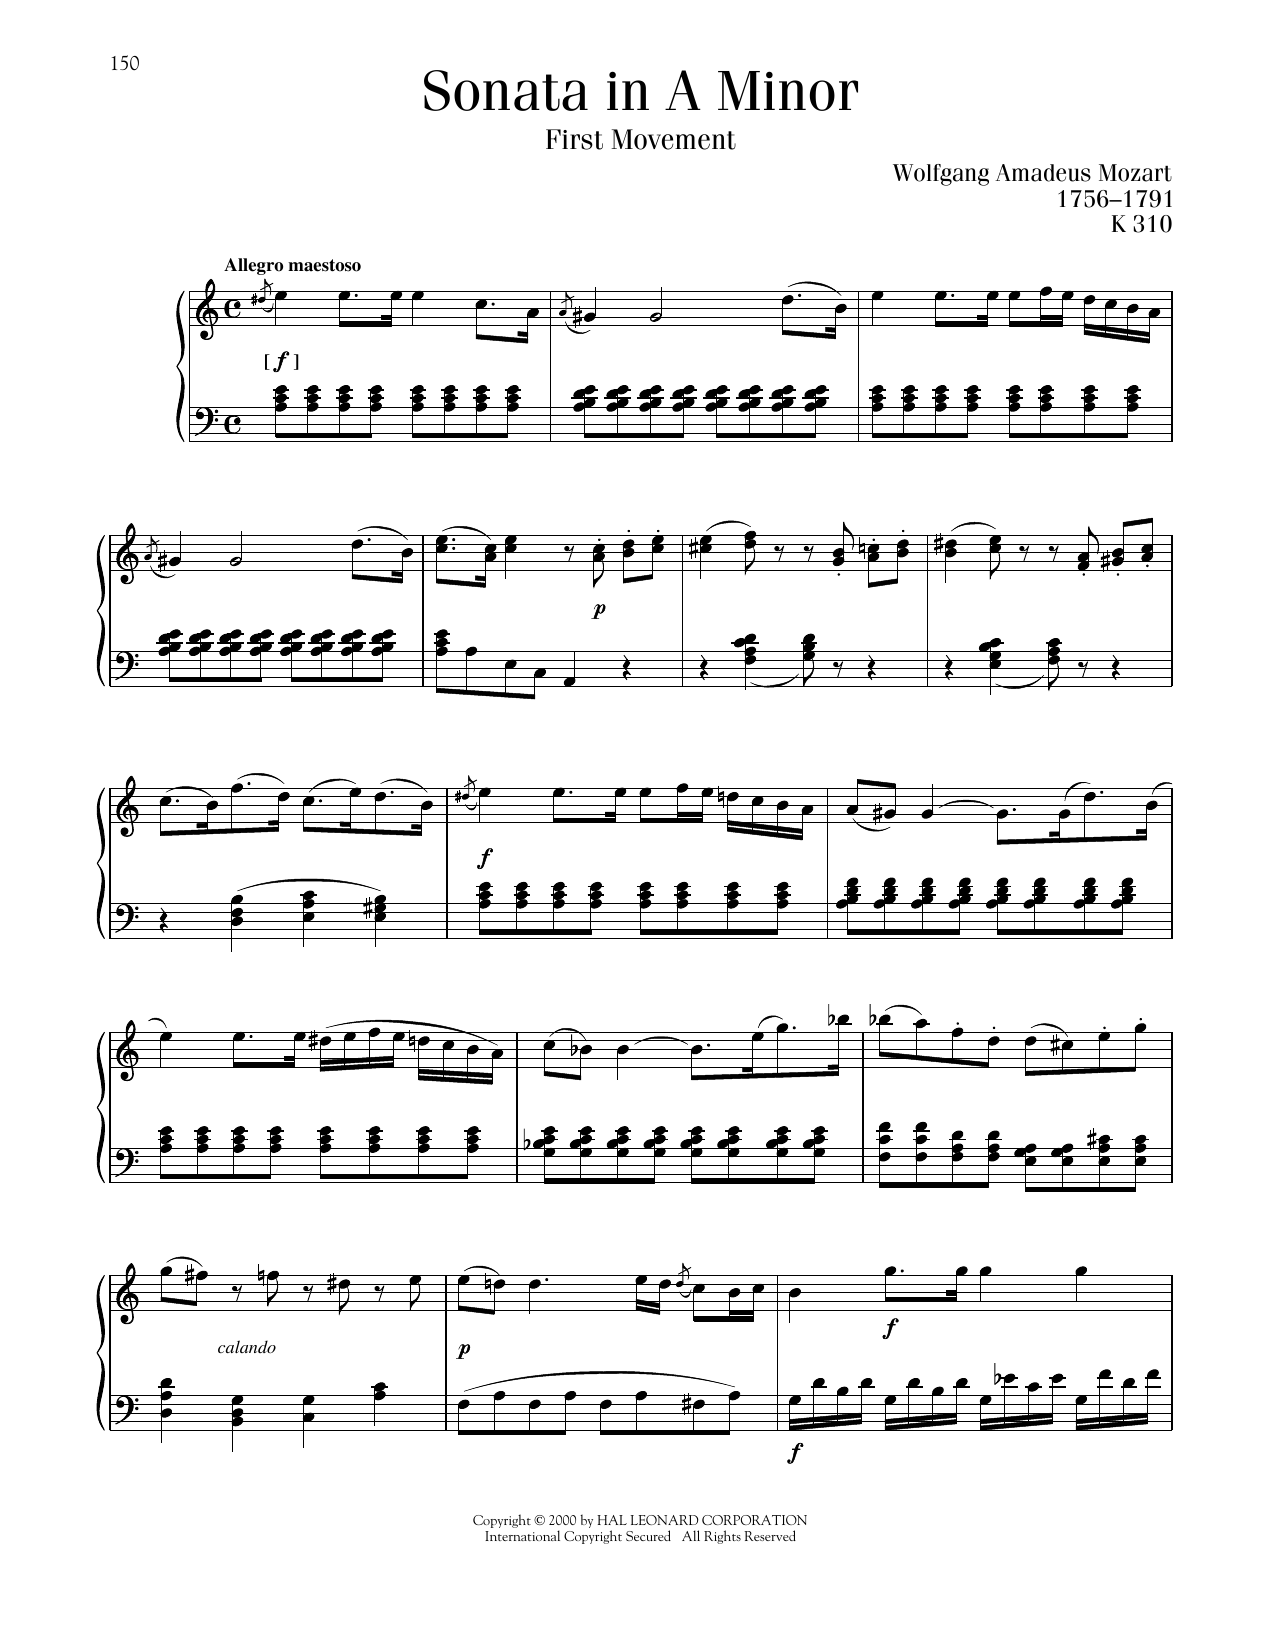 Wolfgang Amadeus Mozart Sonata No. 8 In A Minor, K. 310 sheet music notes printable PDF score